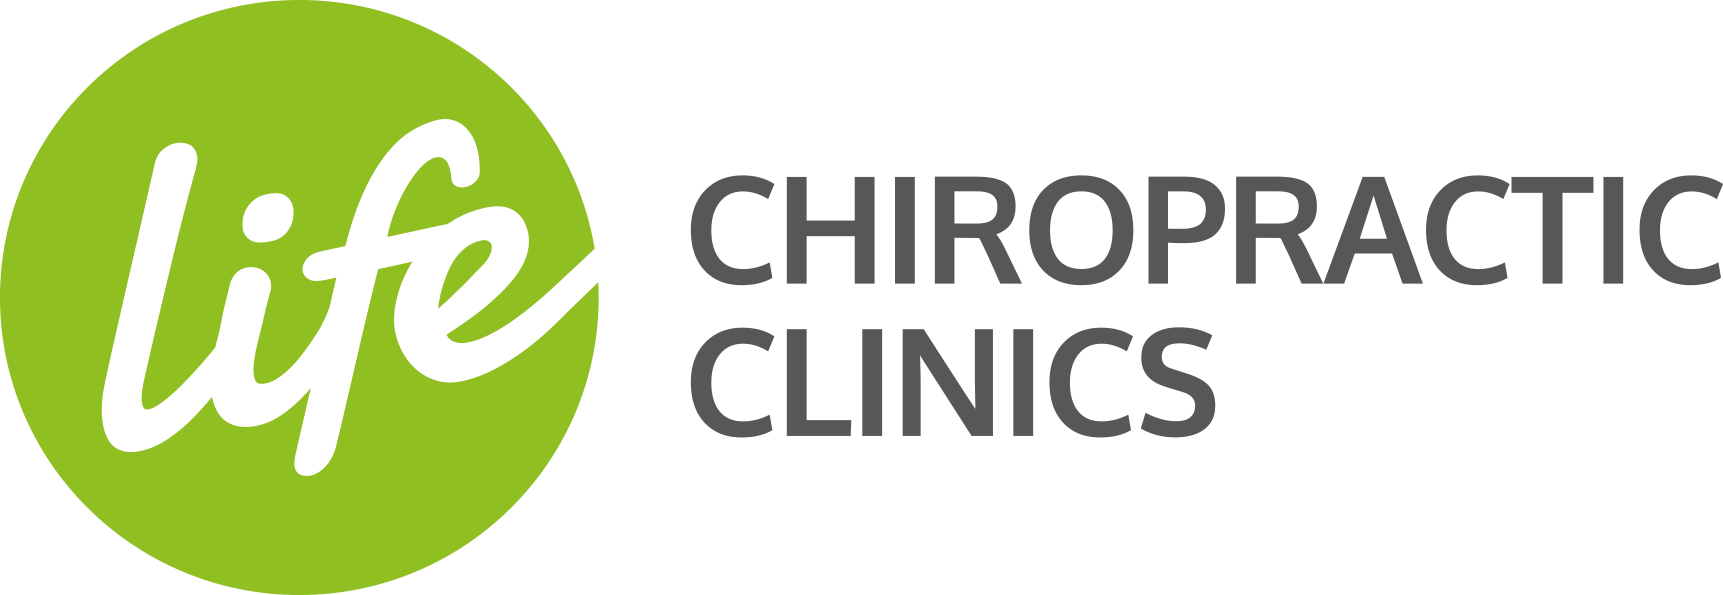 www.chiropracticjobsuk.com